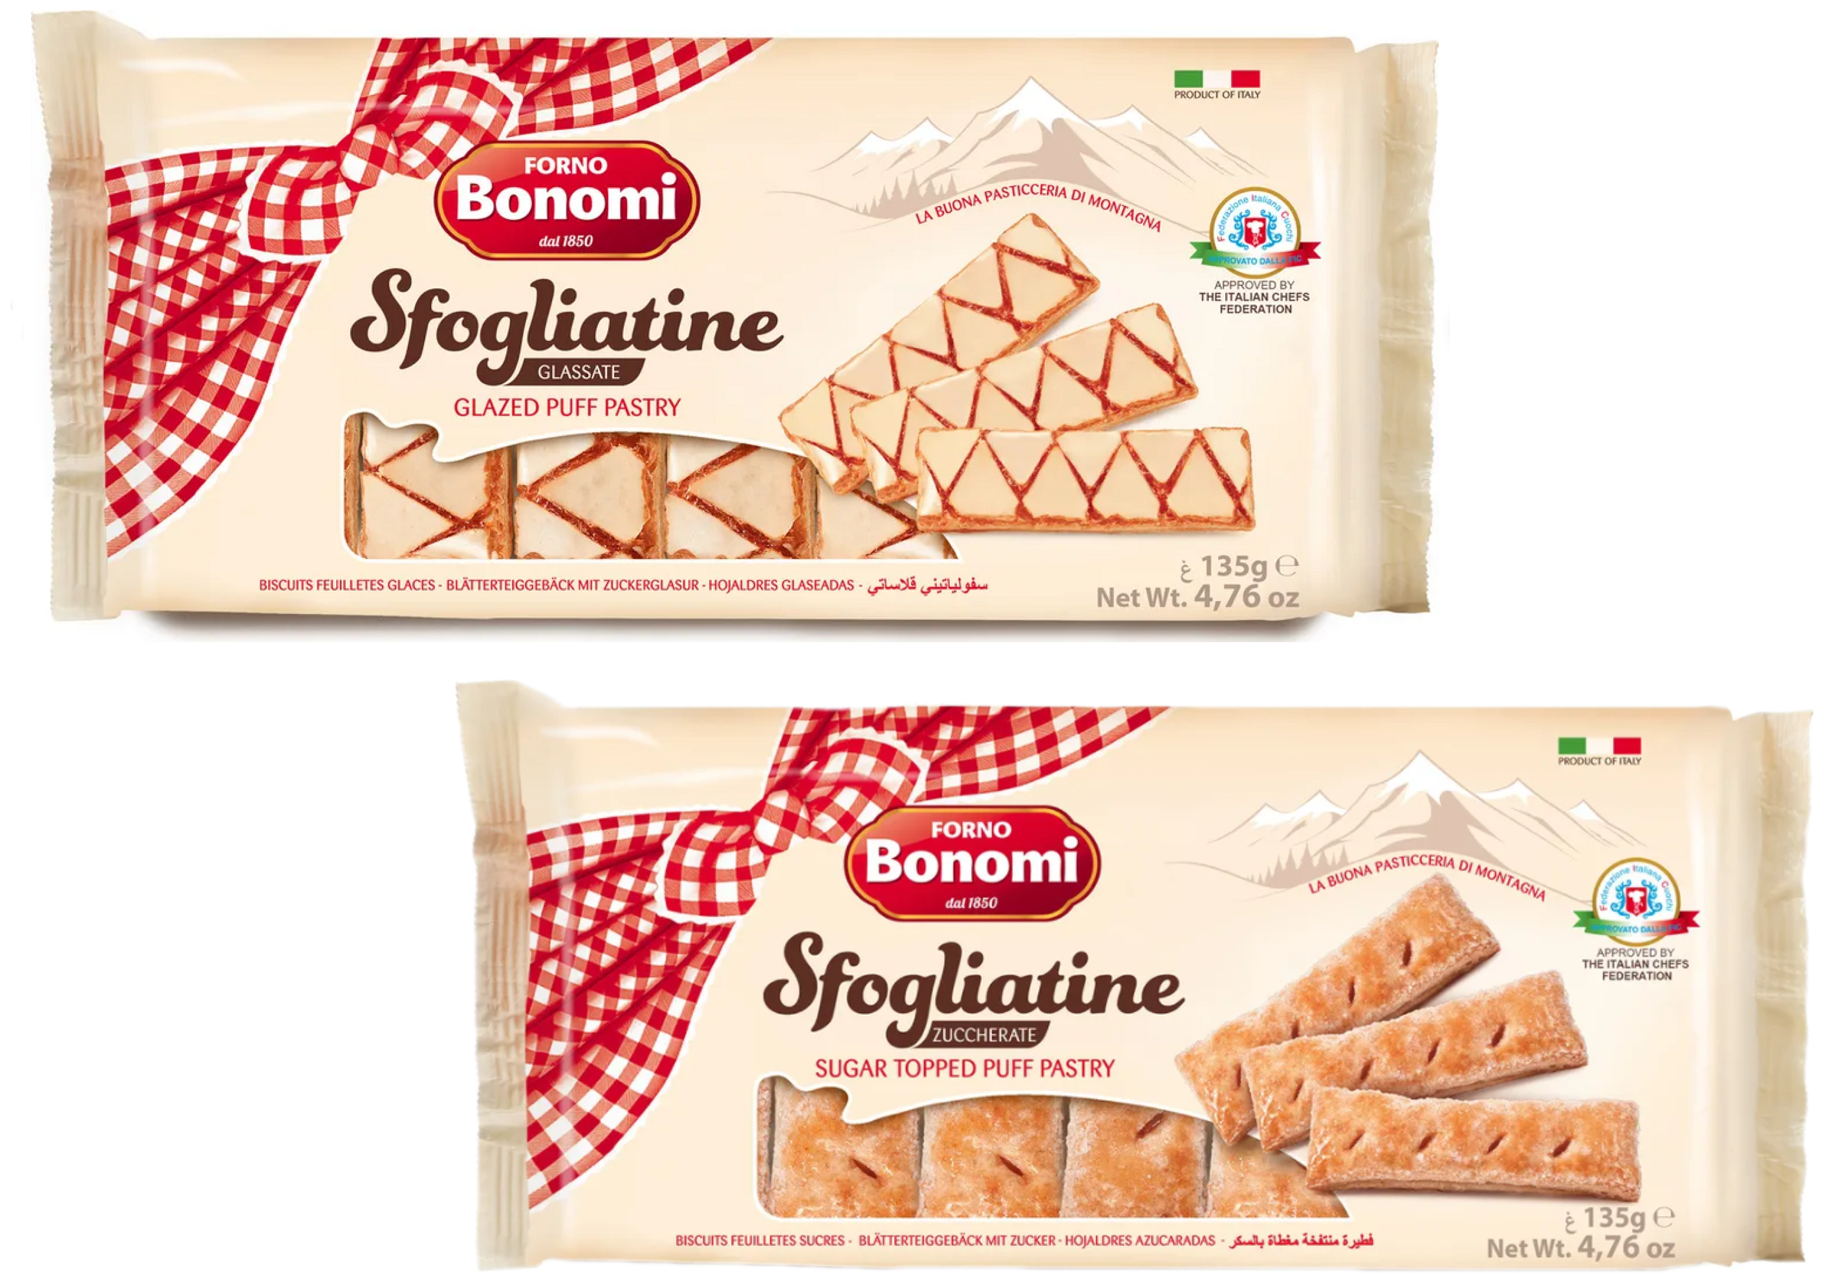 Набор печенья Forno Bonomi (Sfogliatine Zuccherate и Sfogliatine Glassate) - 2 пачки по 135 г